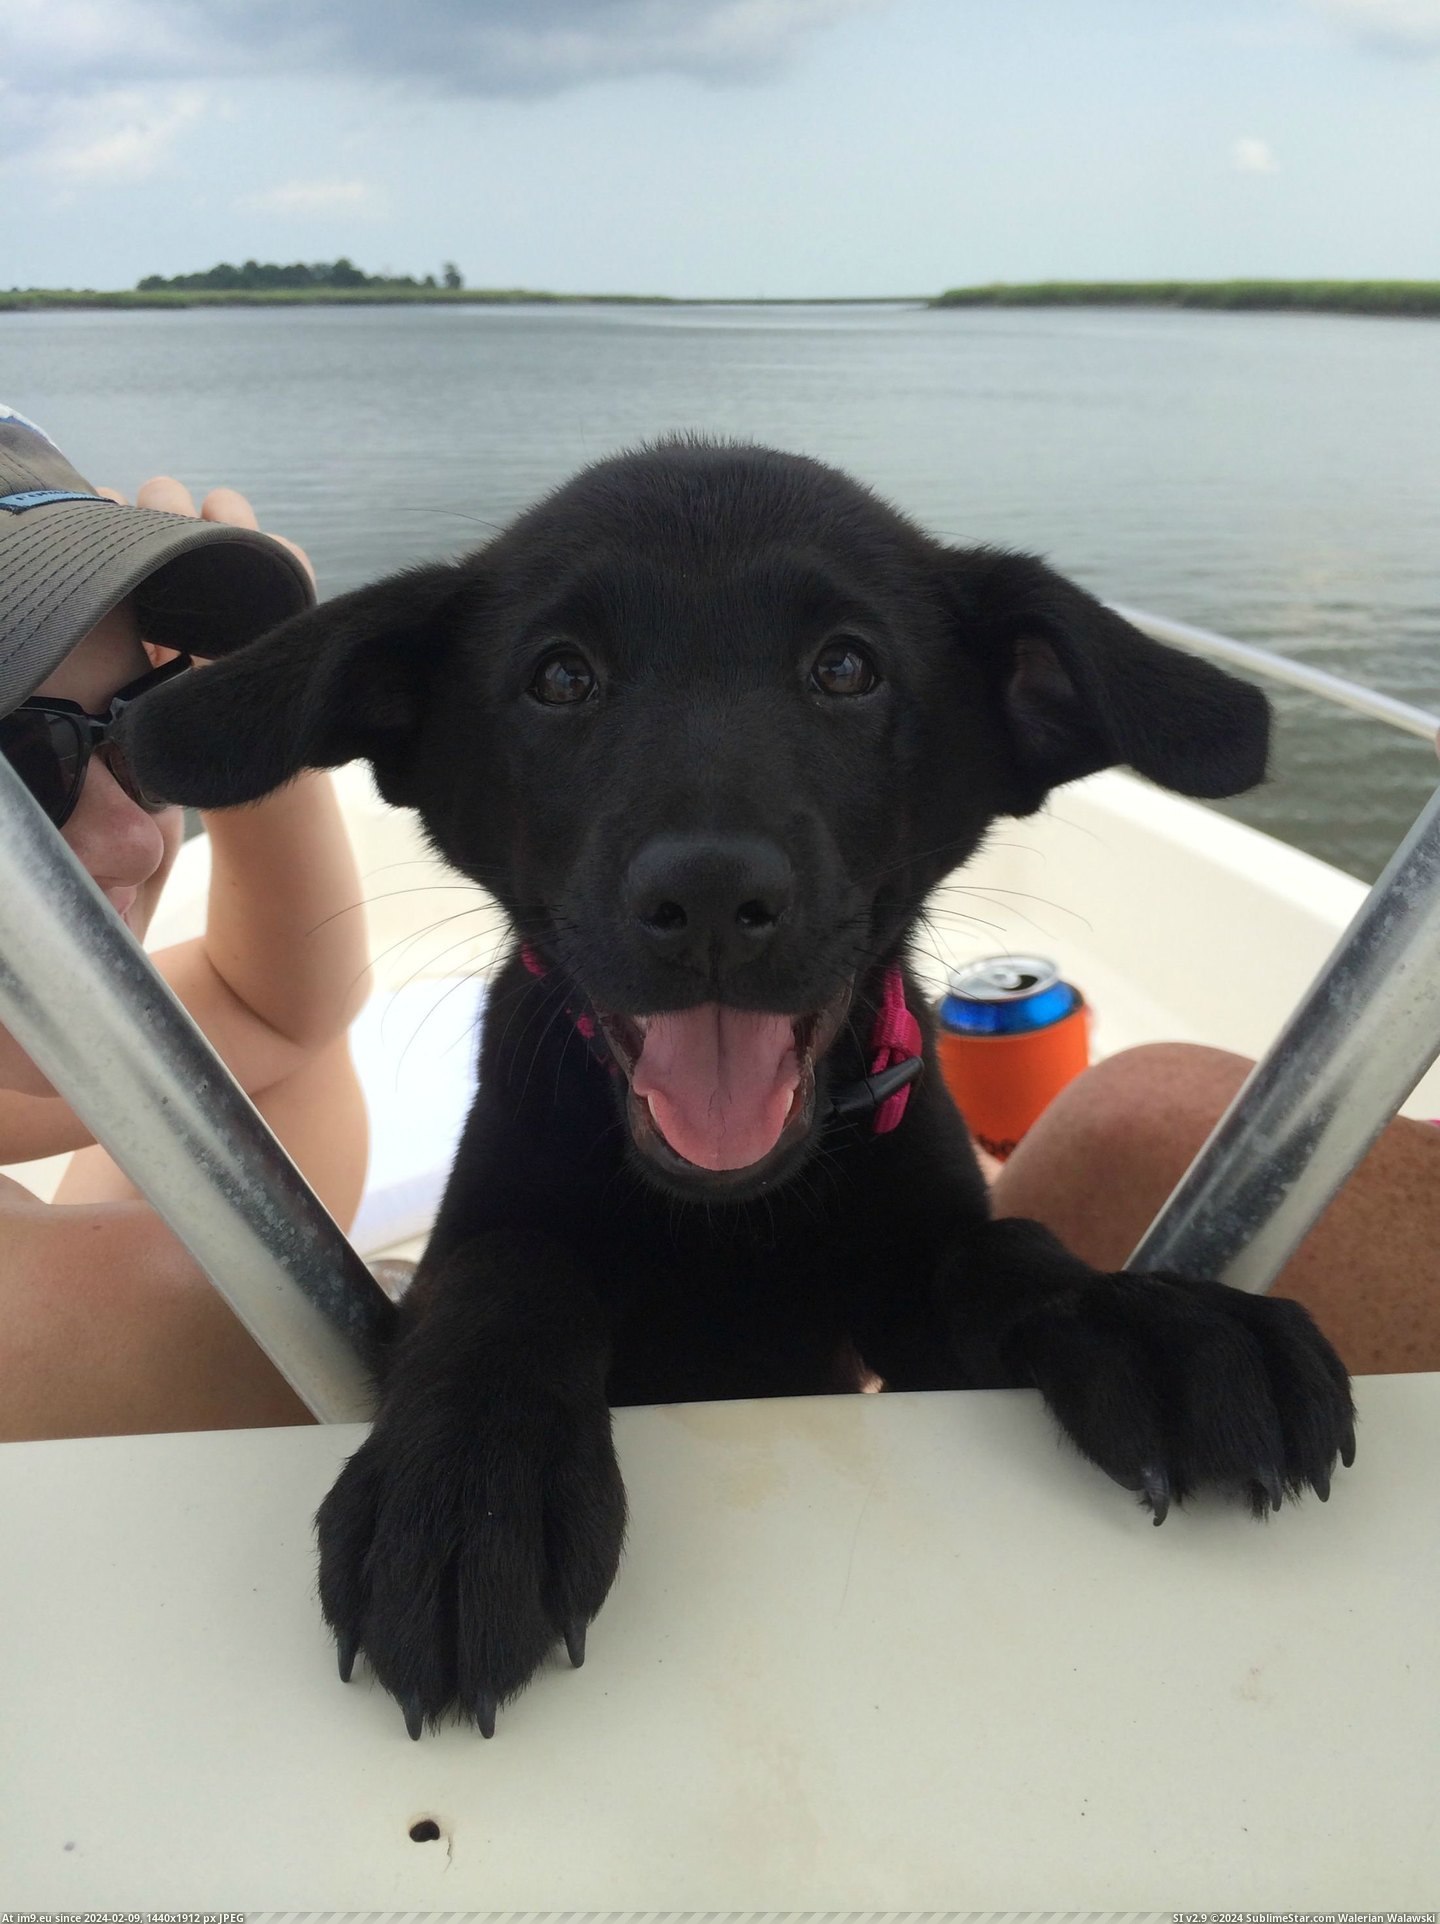 #Day #Meet #Ruw #Boat #Pups [Aww] Pups first day on the boat. Reddit, meet Ruw! Pic. (Bild von album My r/AWW favs))